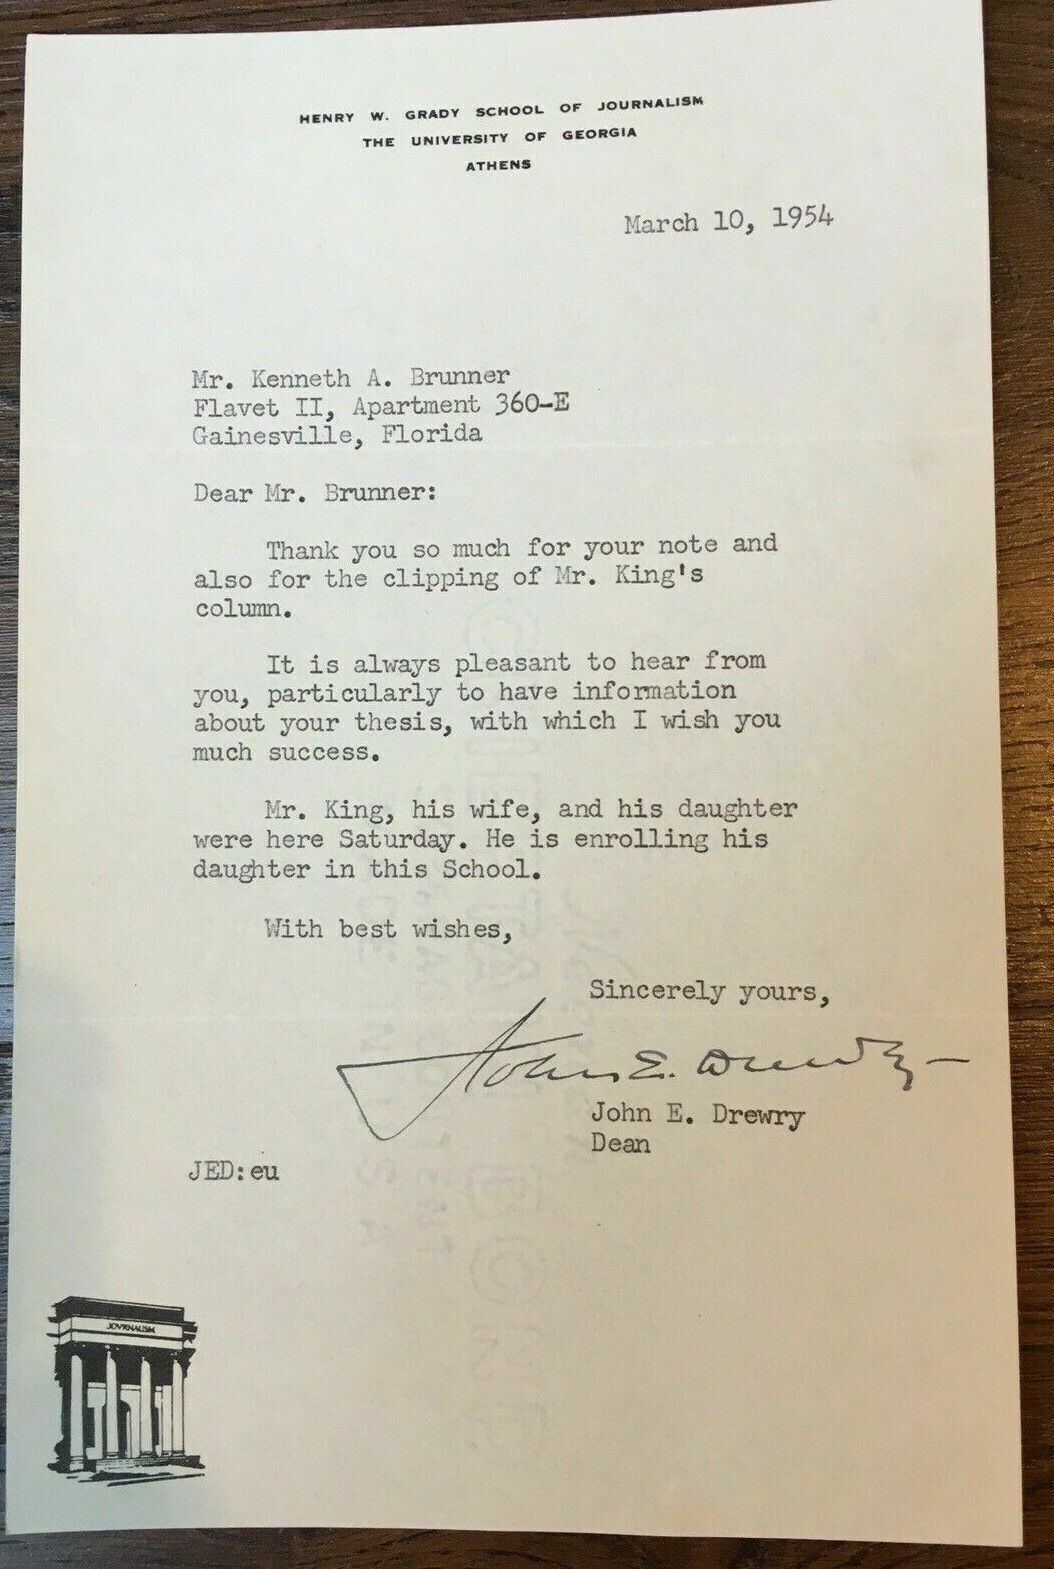 Vtg March 1954 University of Georgia Letter w/ Signature of John E Drewry - Dean